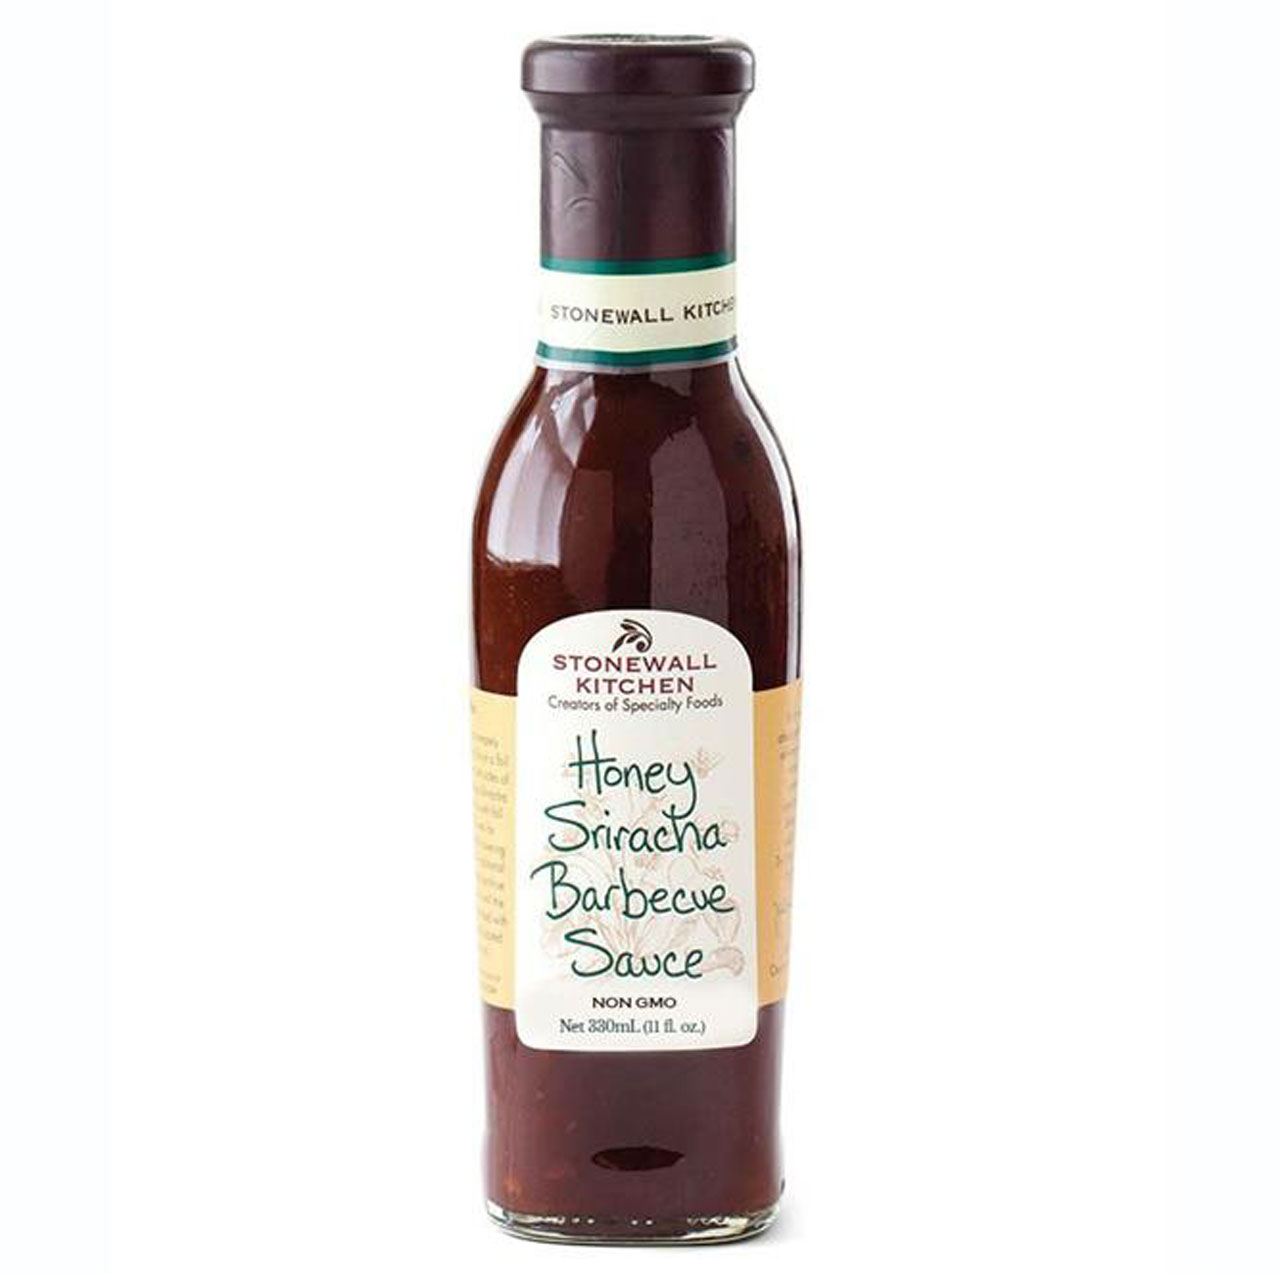 Sriracha Mayoo Sauce angenehm würzig scharfe